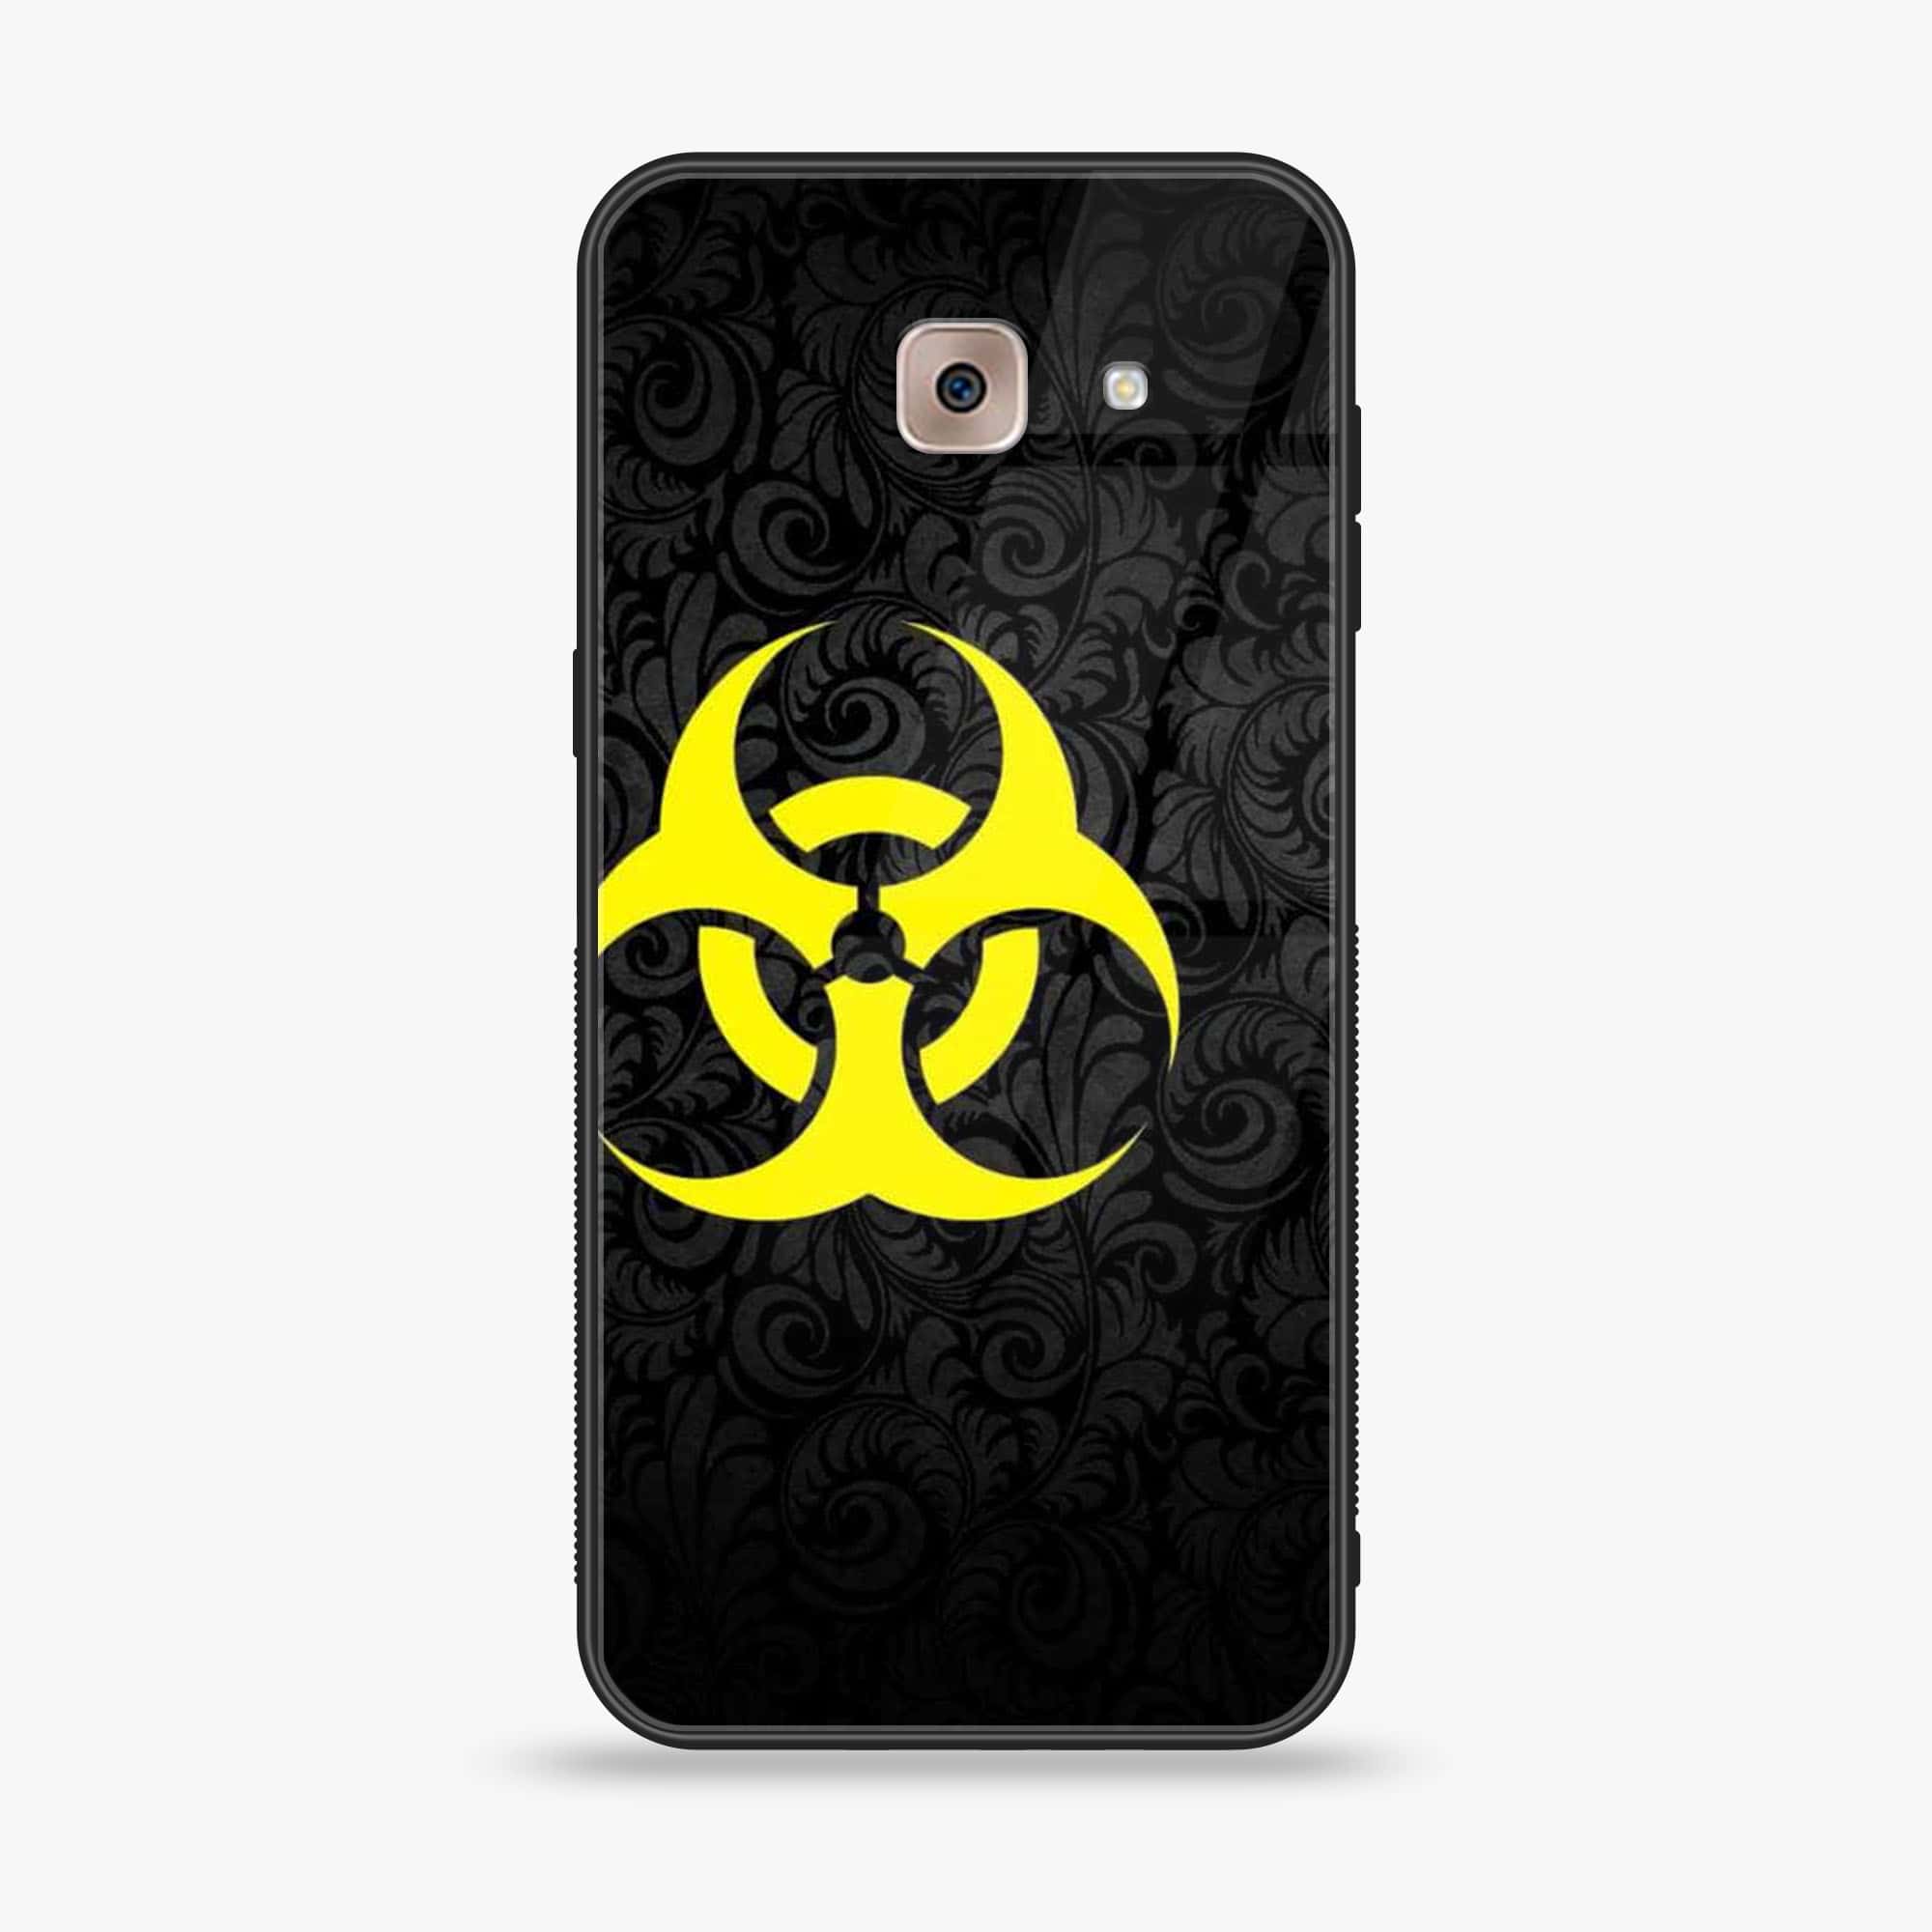 Samsung Galaxy J7 Max - Biohazard Sign Series - Premium Printed Glass soft Bumper shock Proof Case